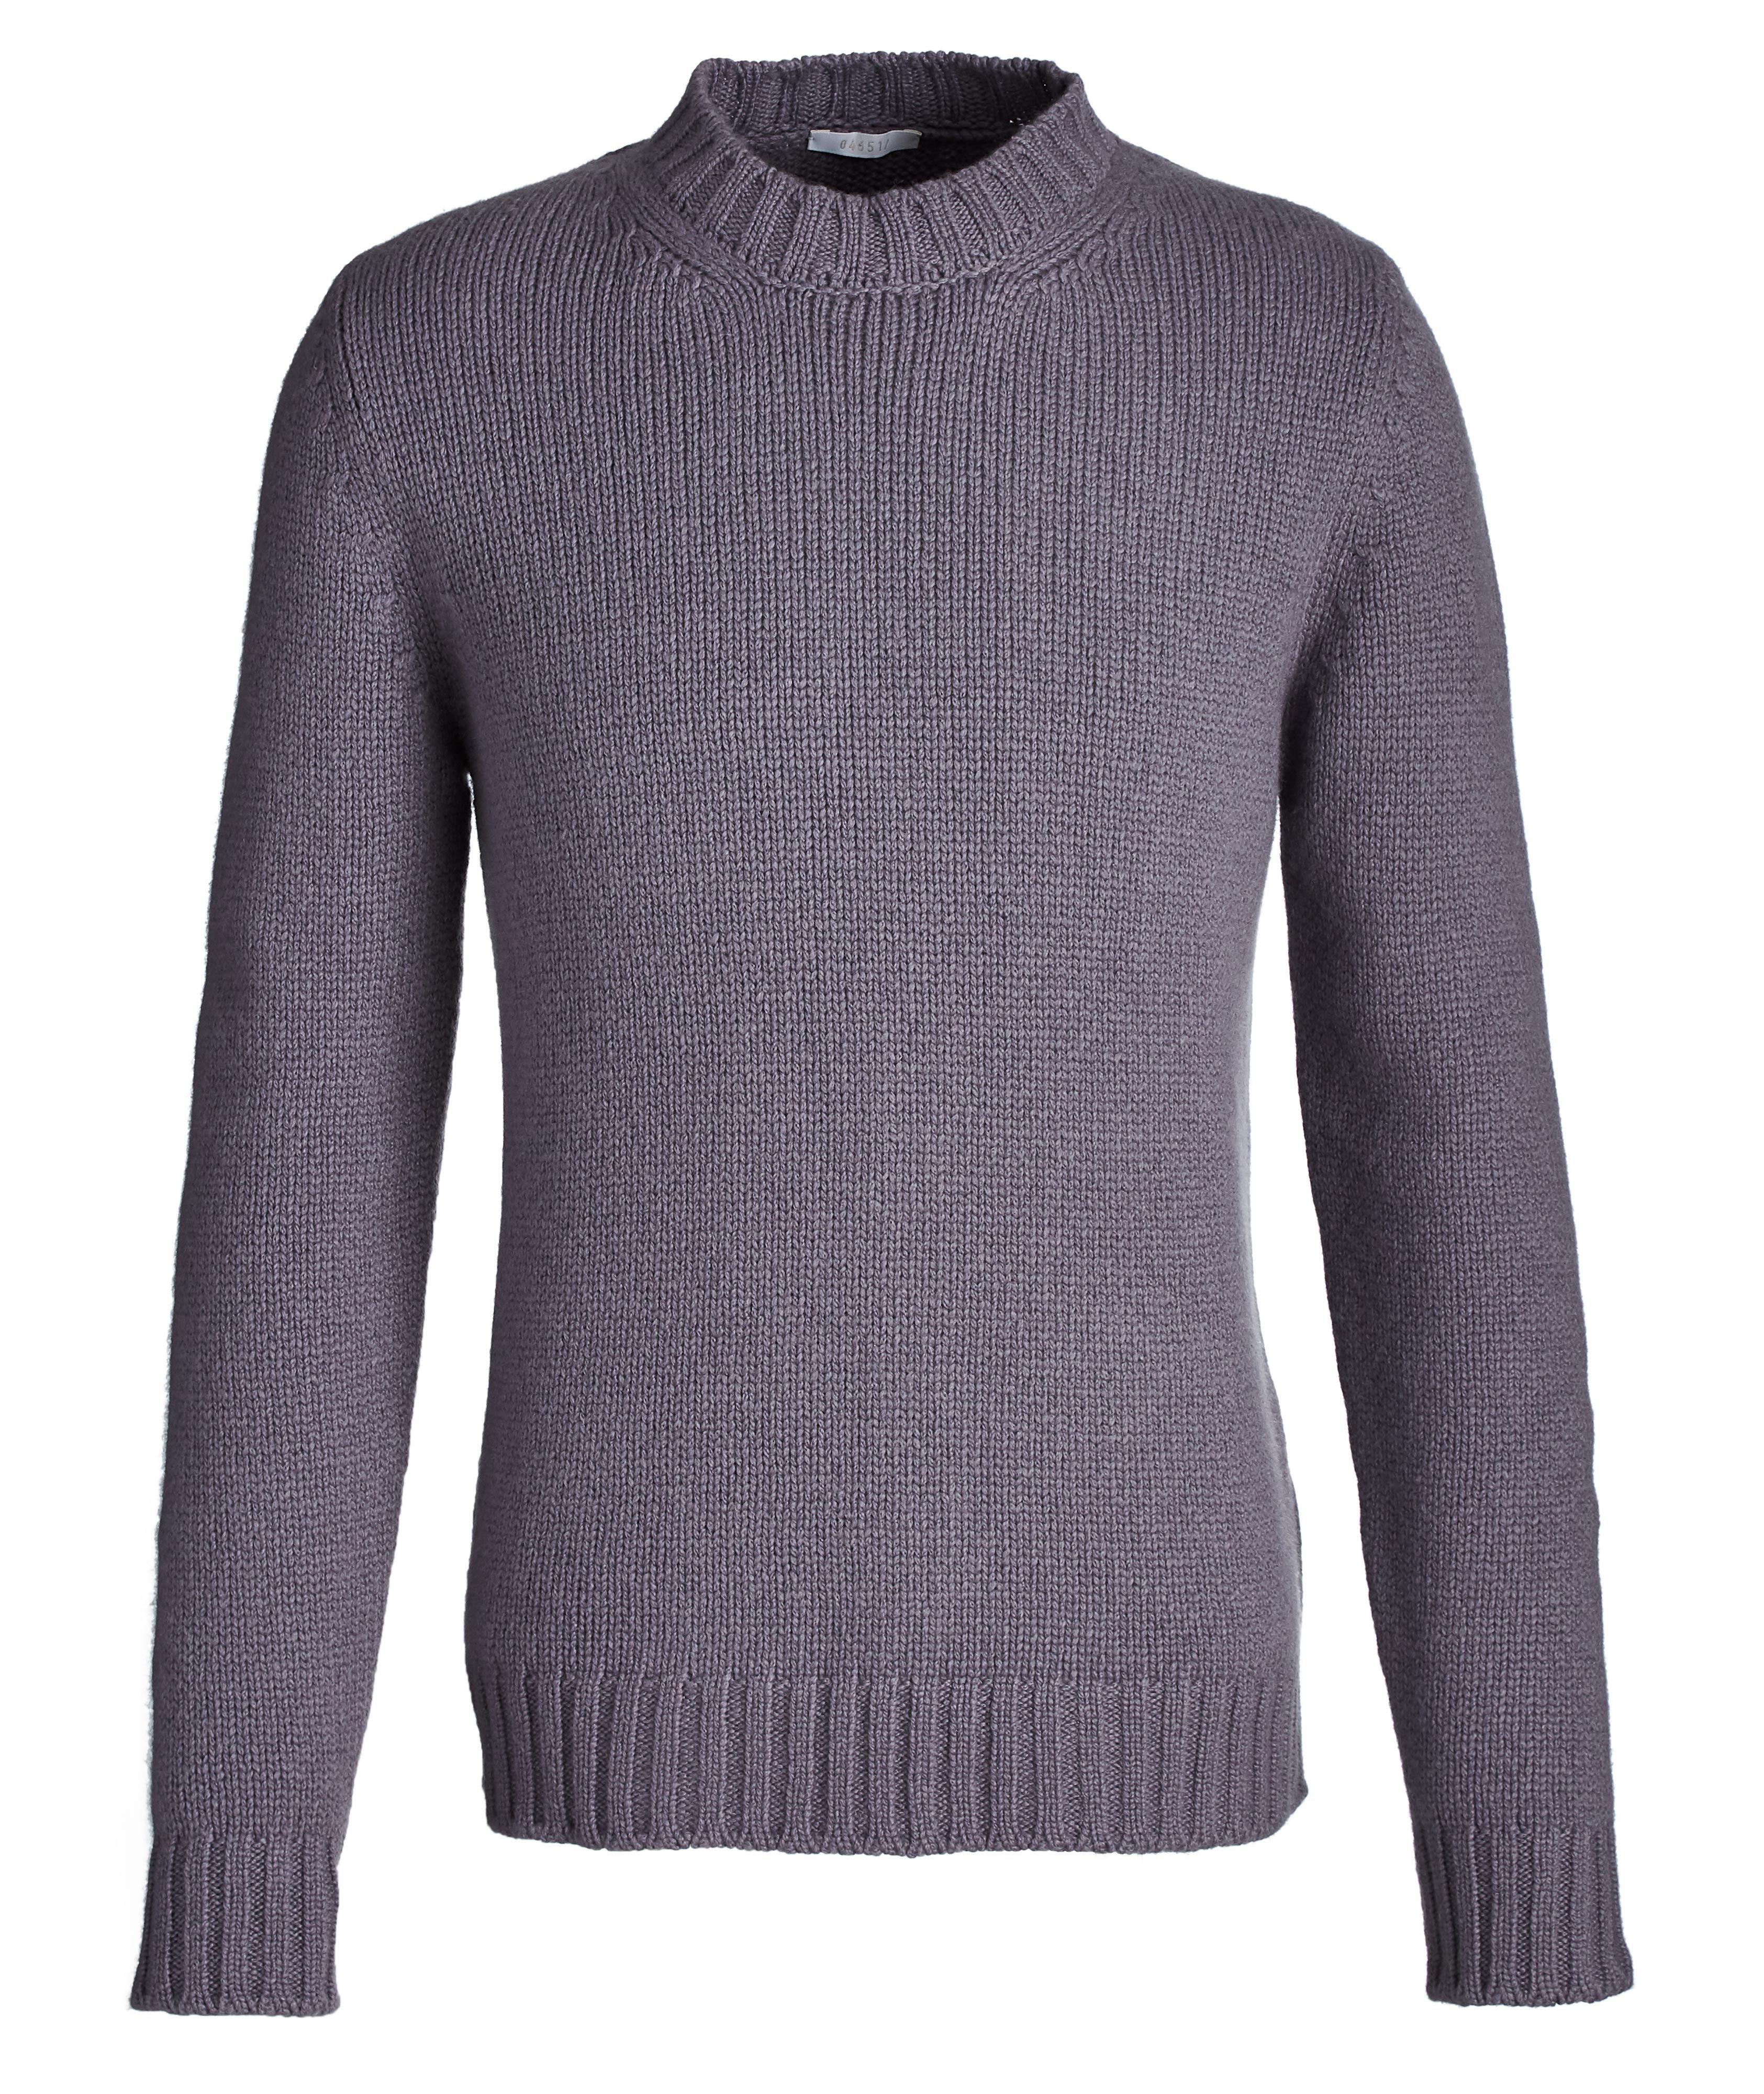 Cashmere Knit Sweater image 0